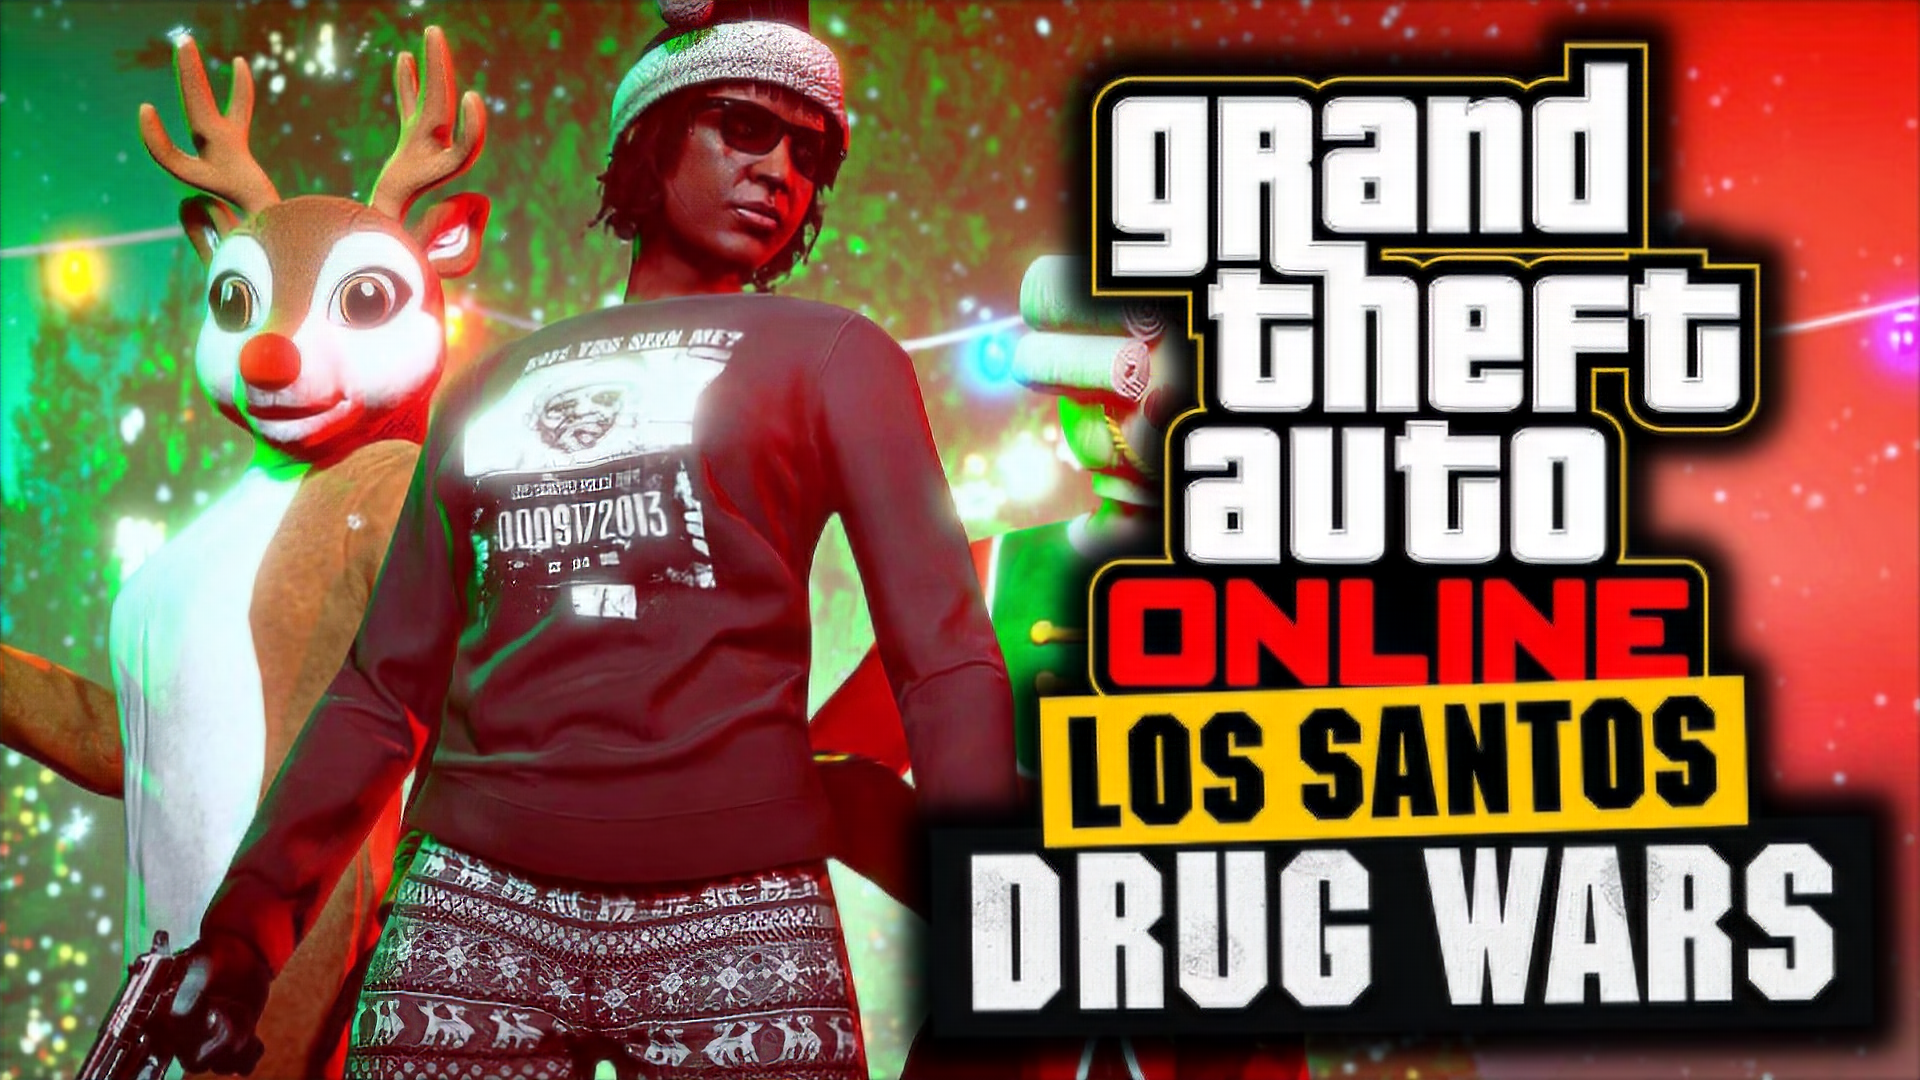 GTA 온라인 로스 산토스 마약 전쟁